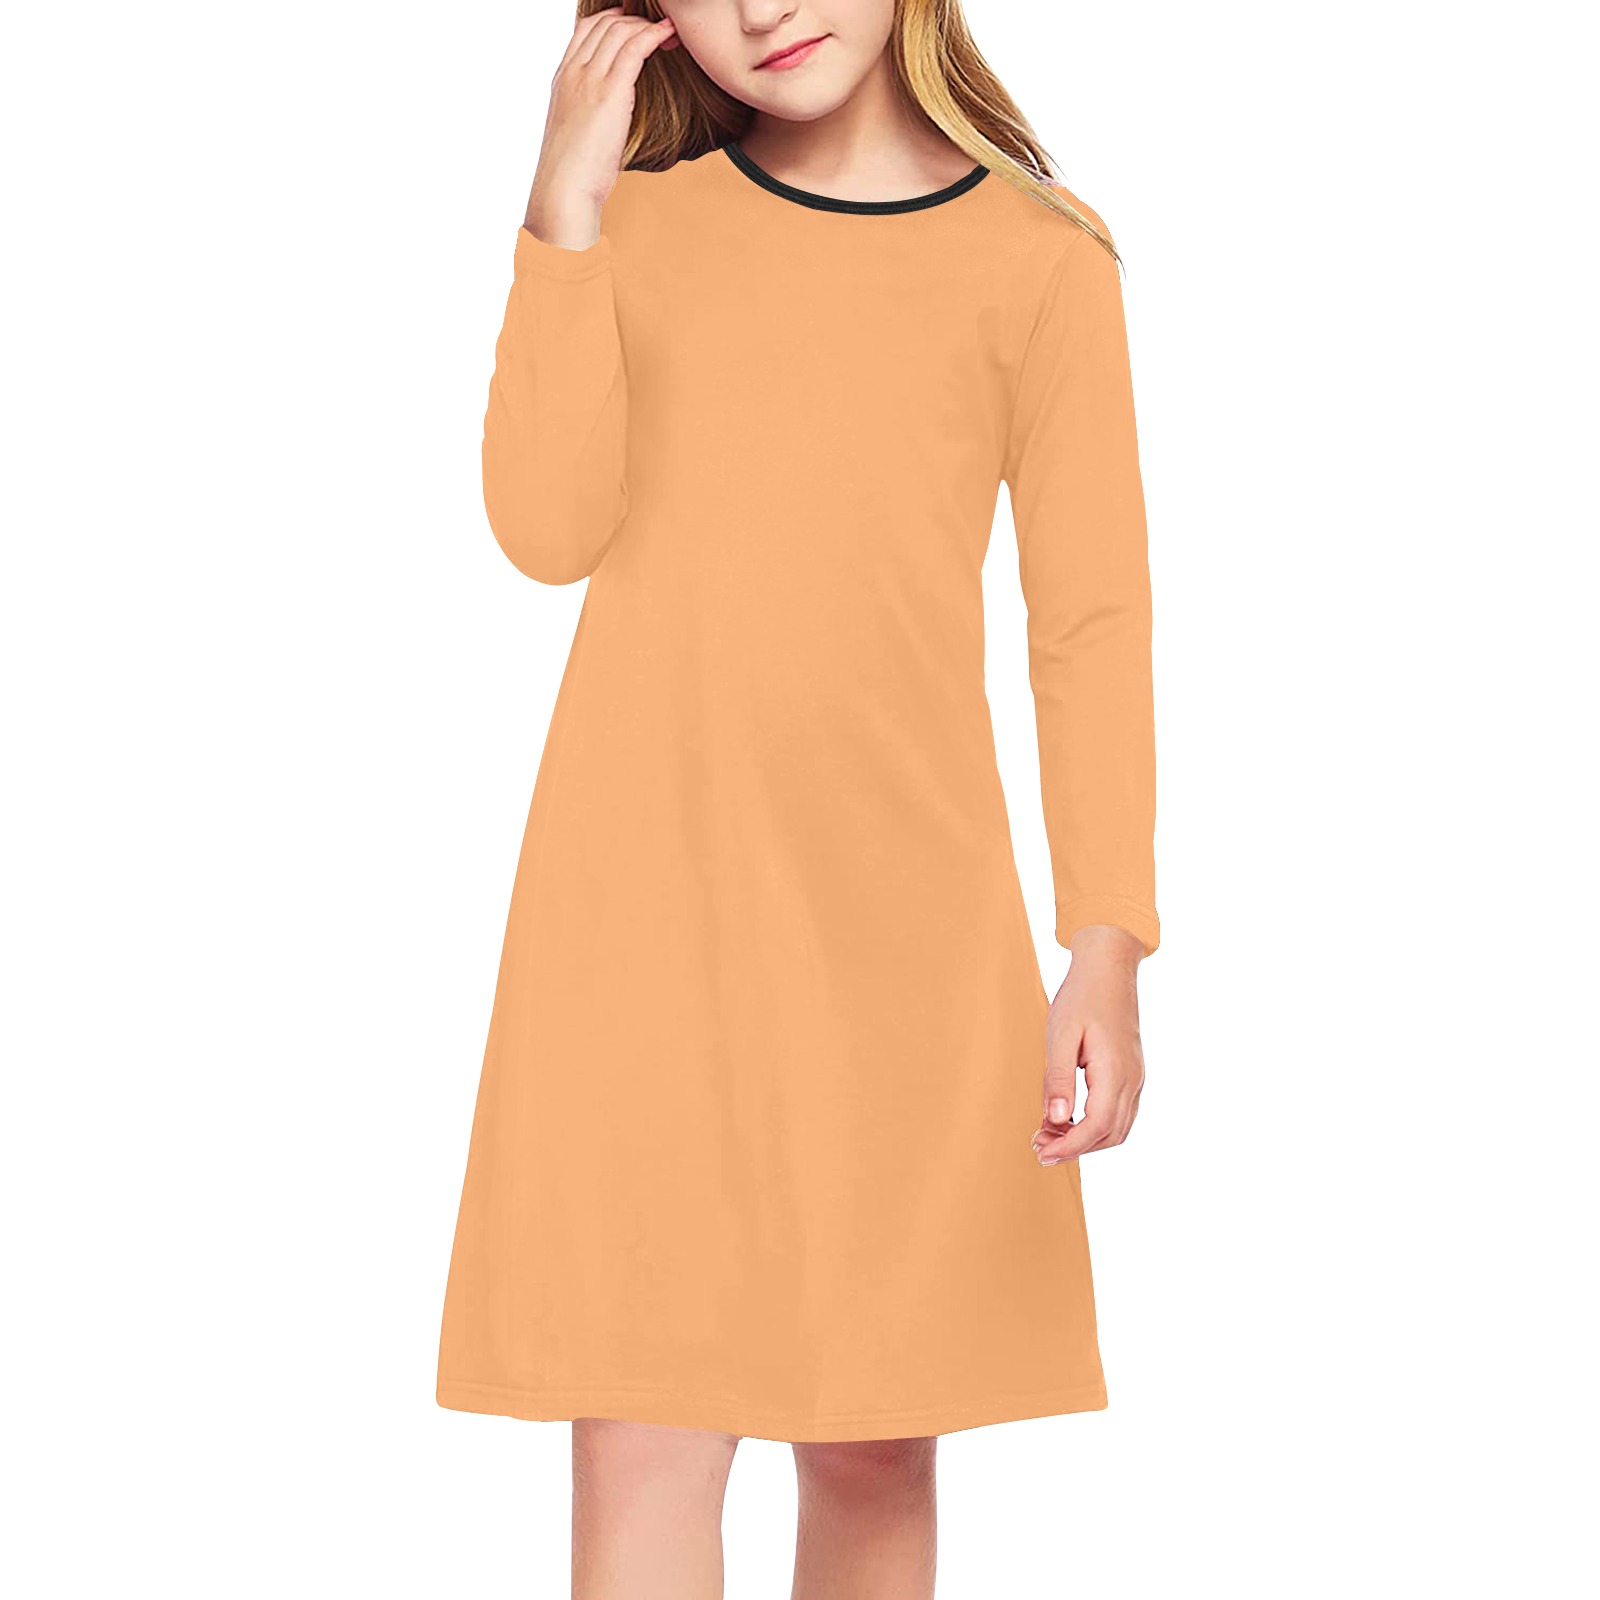 color sandy brown Girls' Long Sleeve Dress (Model D59)